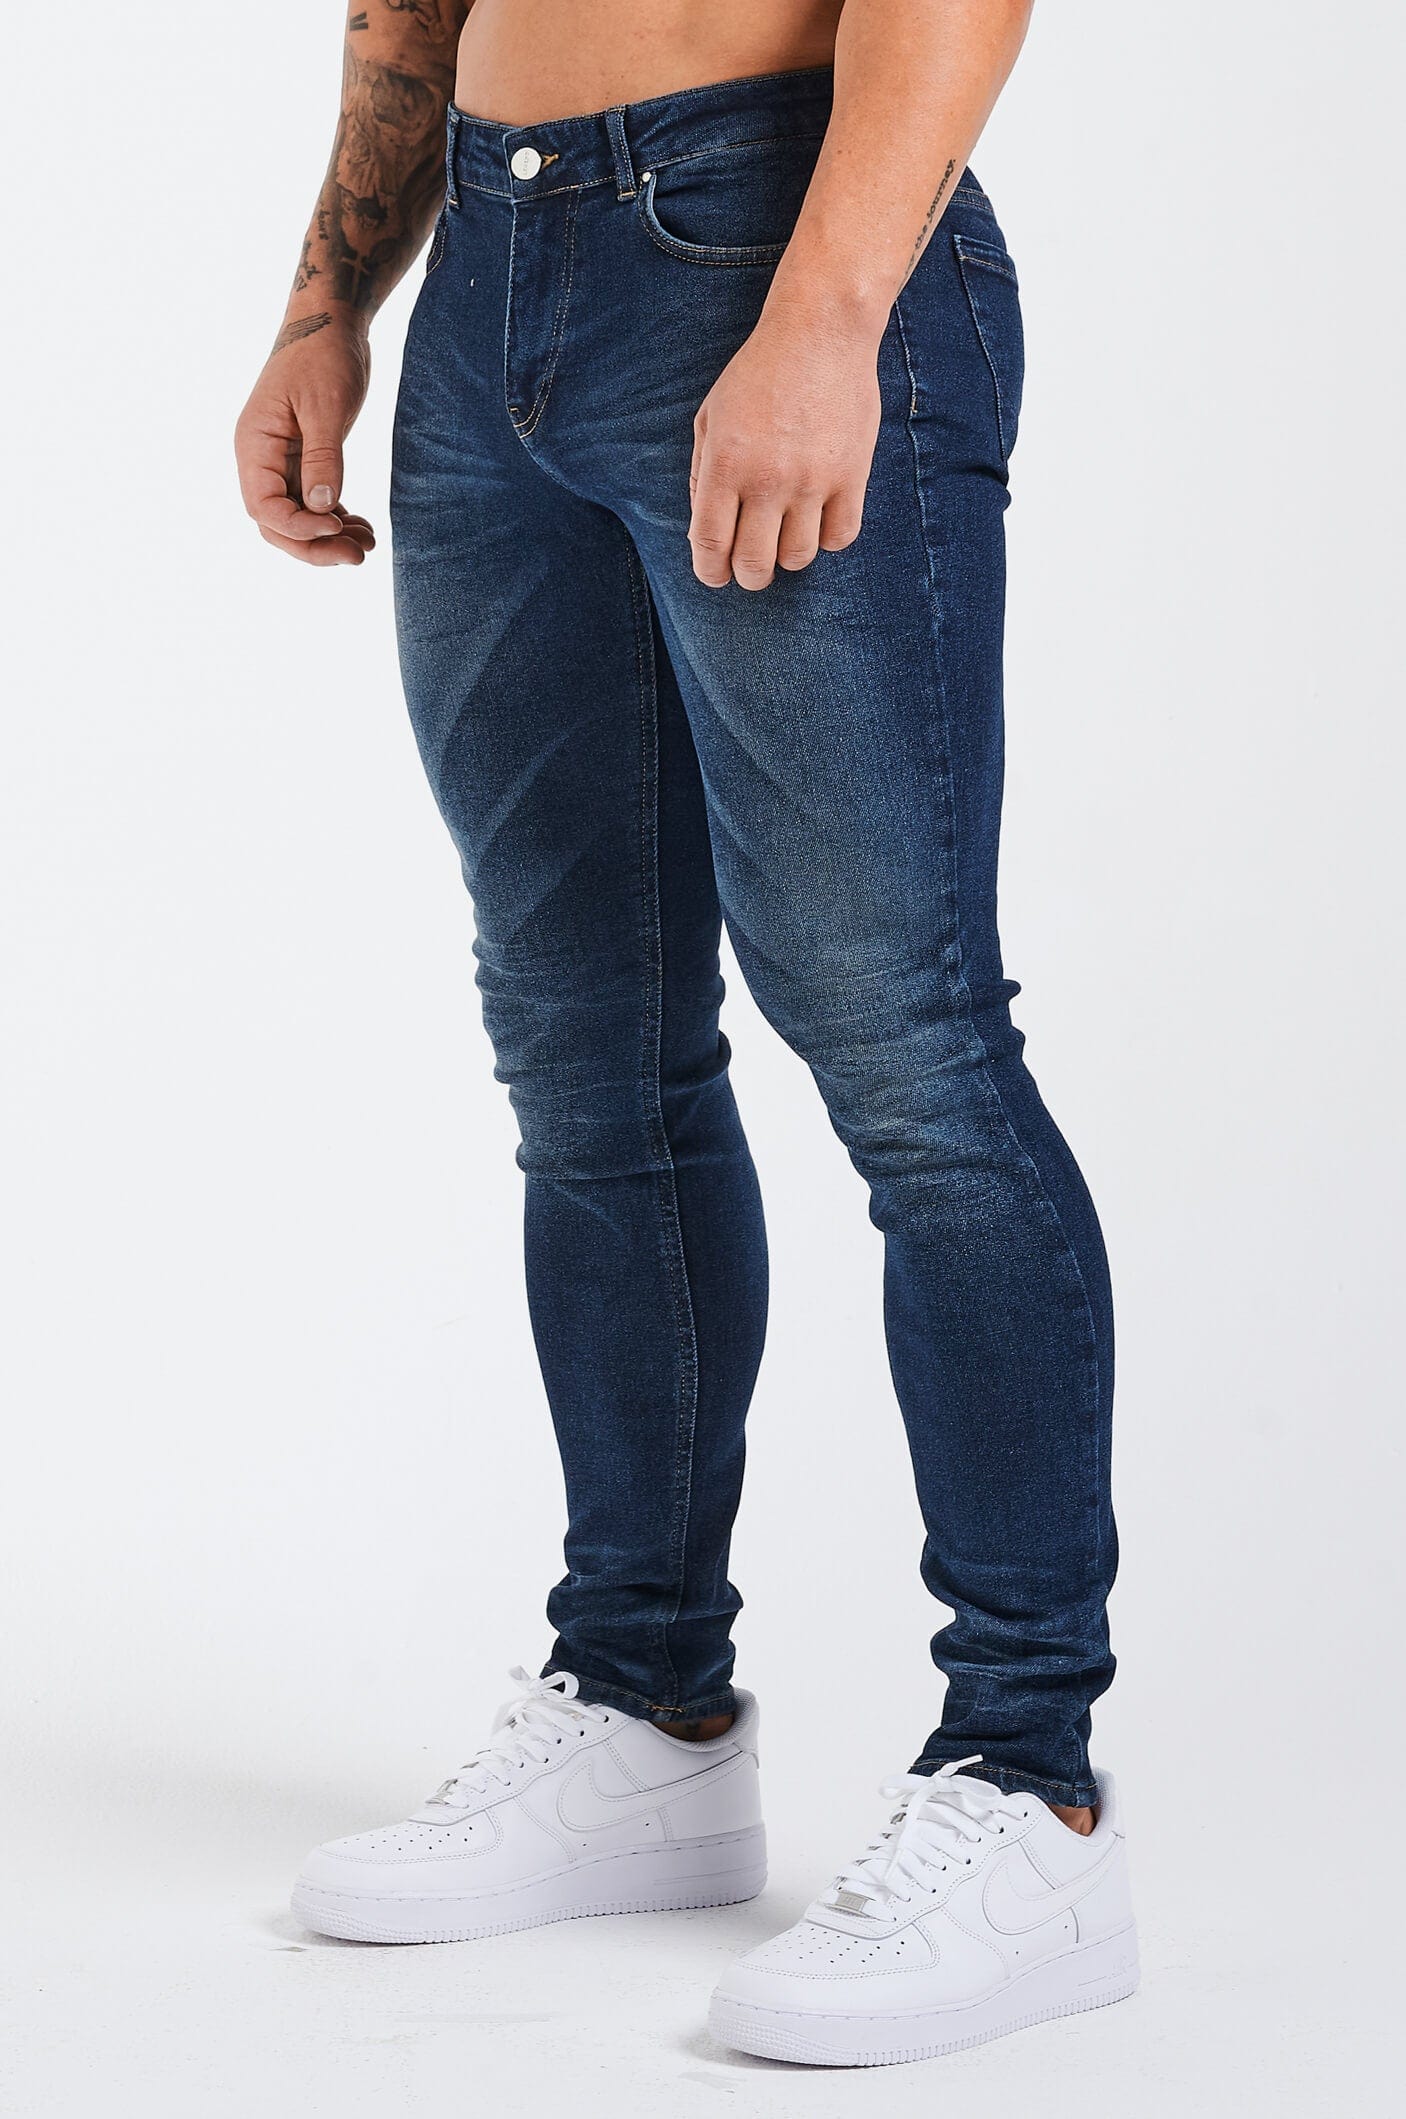 Legend London Jeans - slim 2.0 SLIM FIT JEANS 2.0 DETAILED - INDIGO BLUE